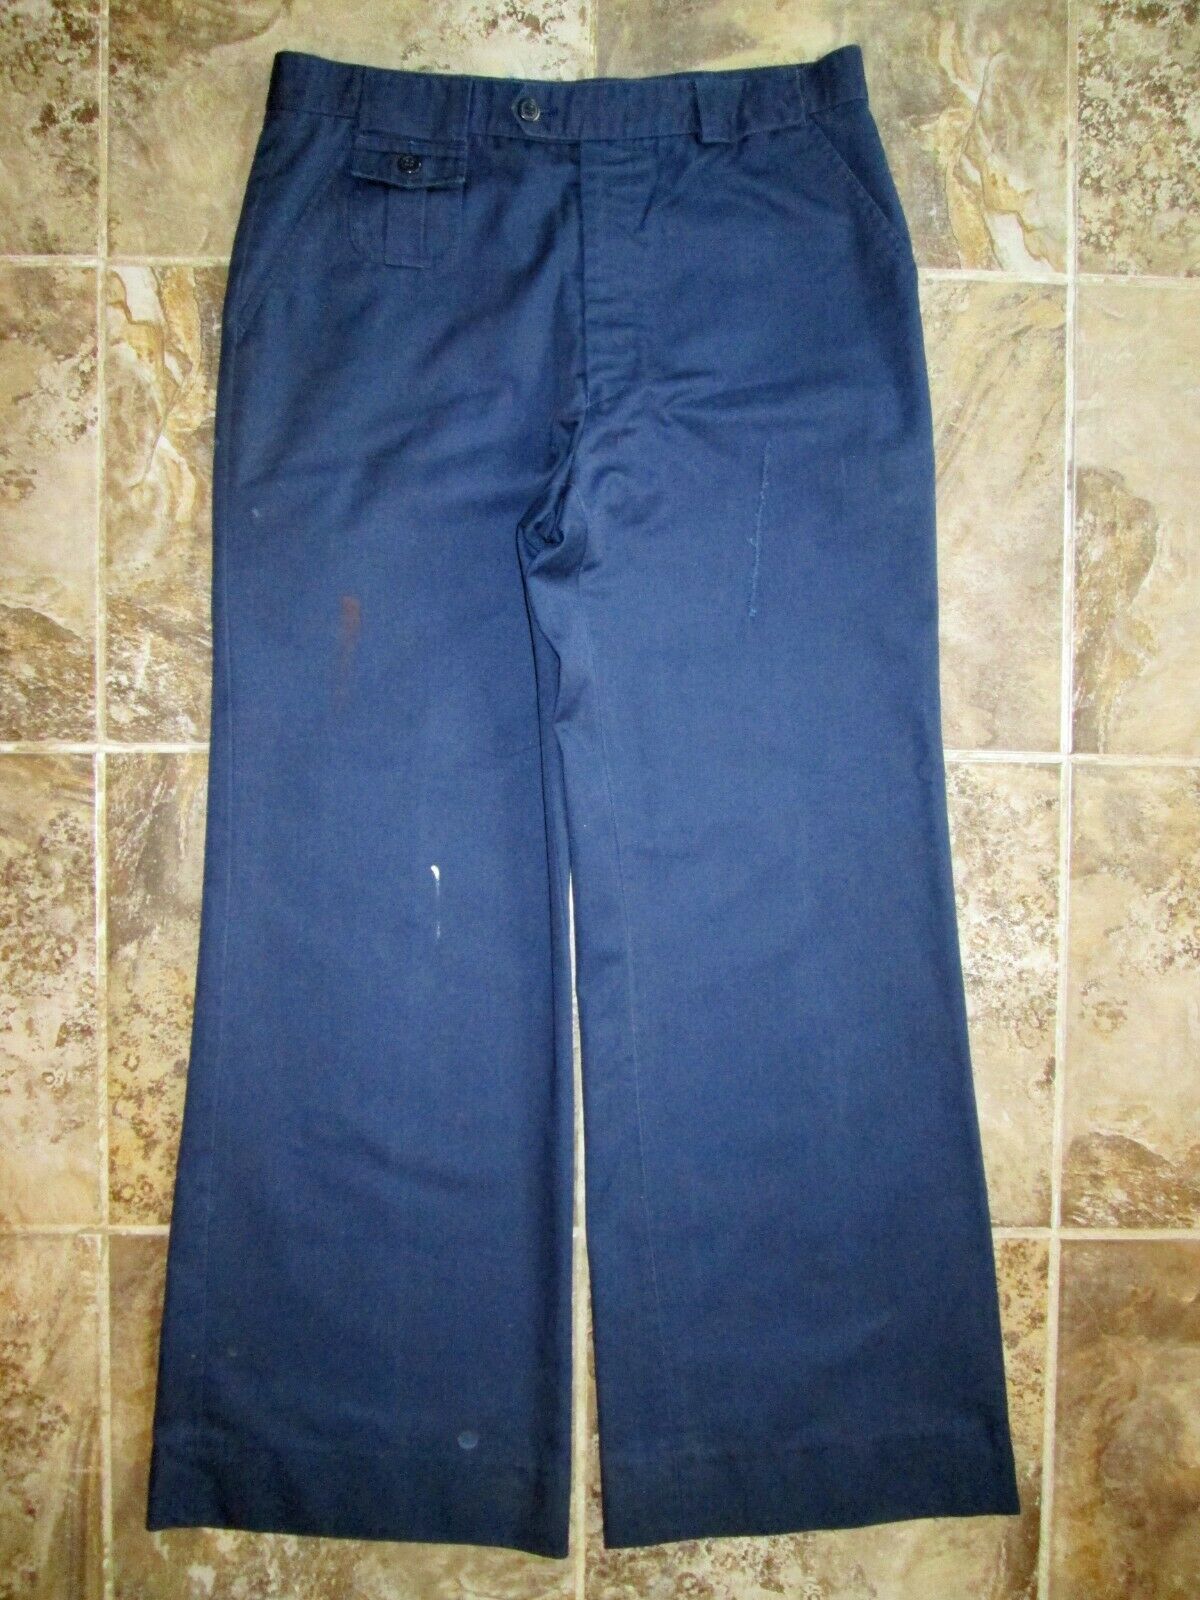 Vtg Richman Brothers Pants 32x30 Military-like Navy Blue Sailor Uniform Trousers